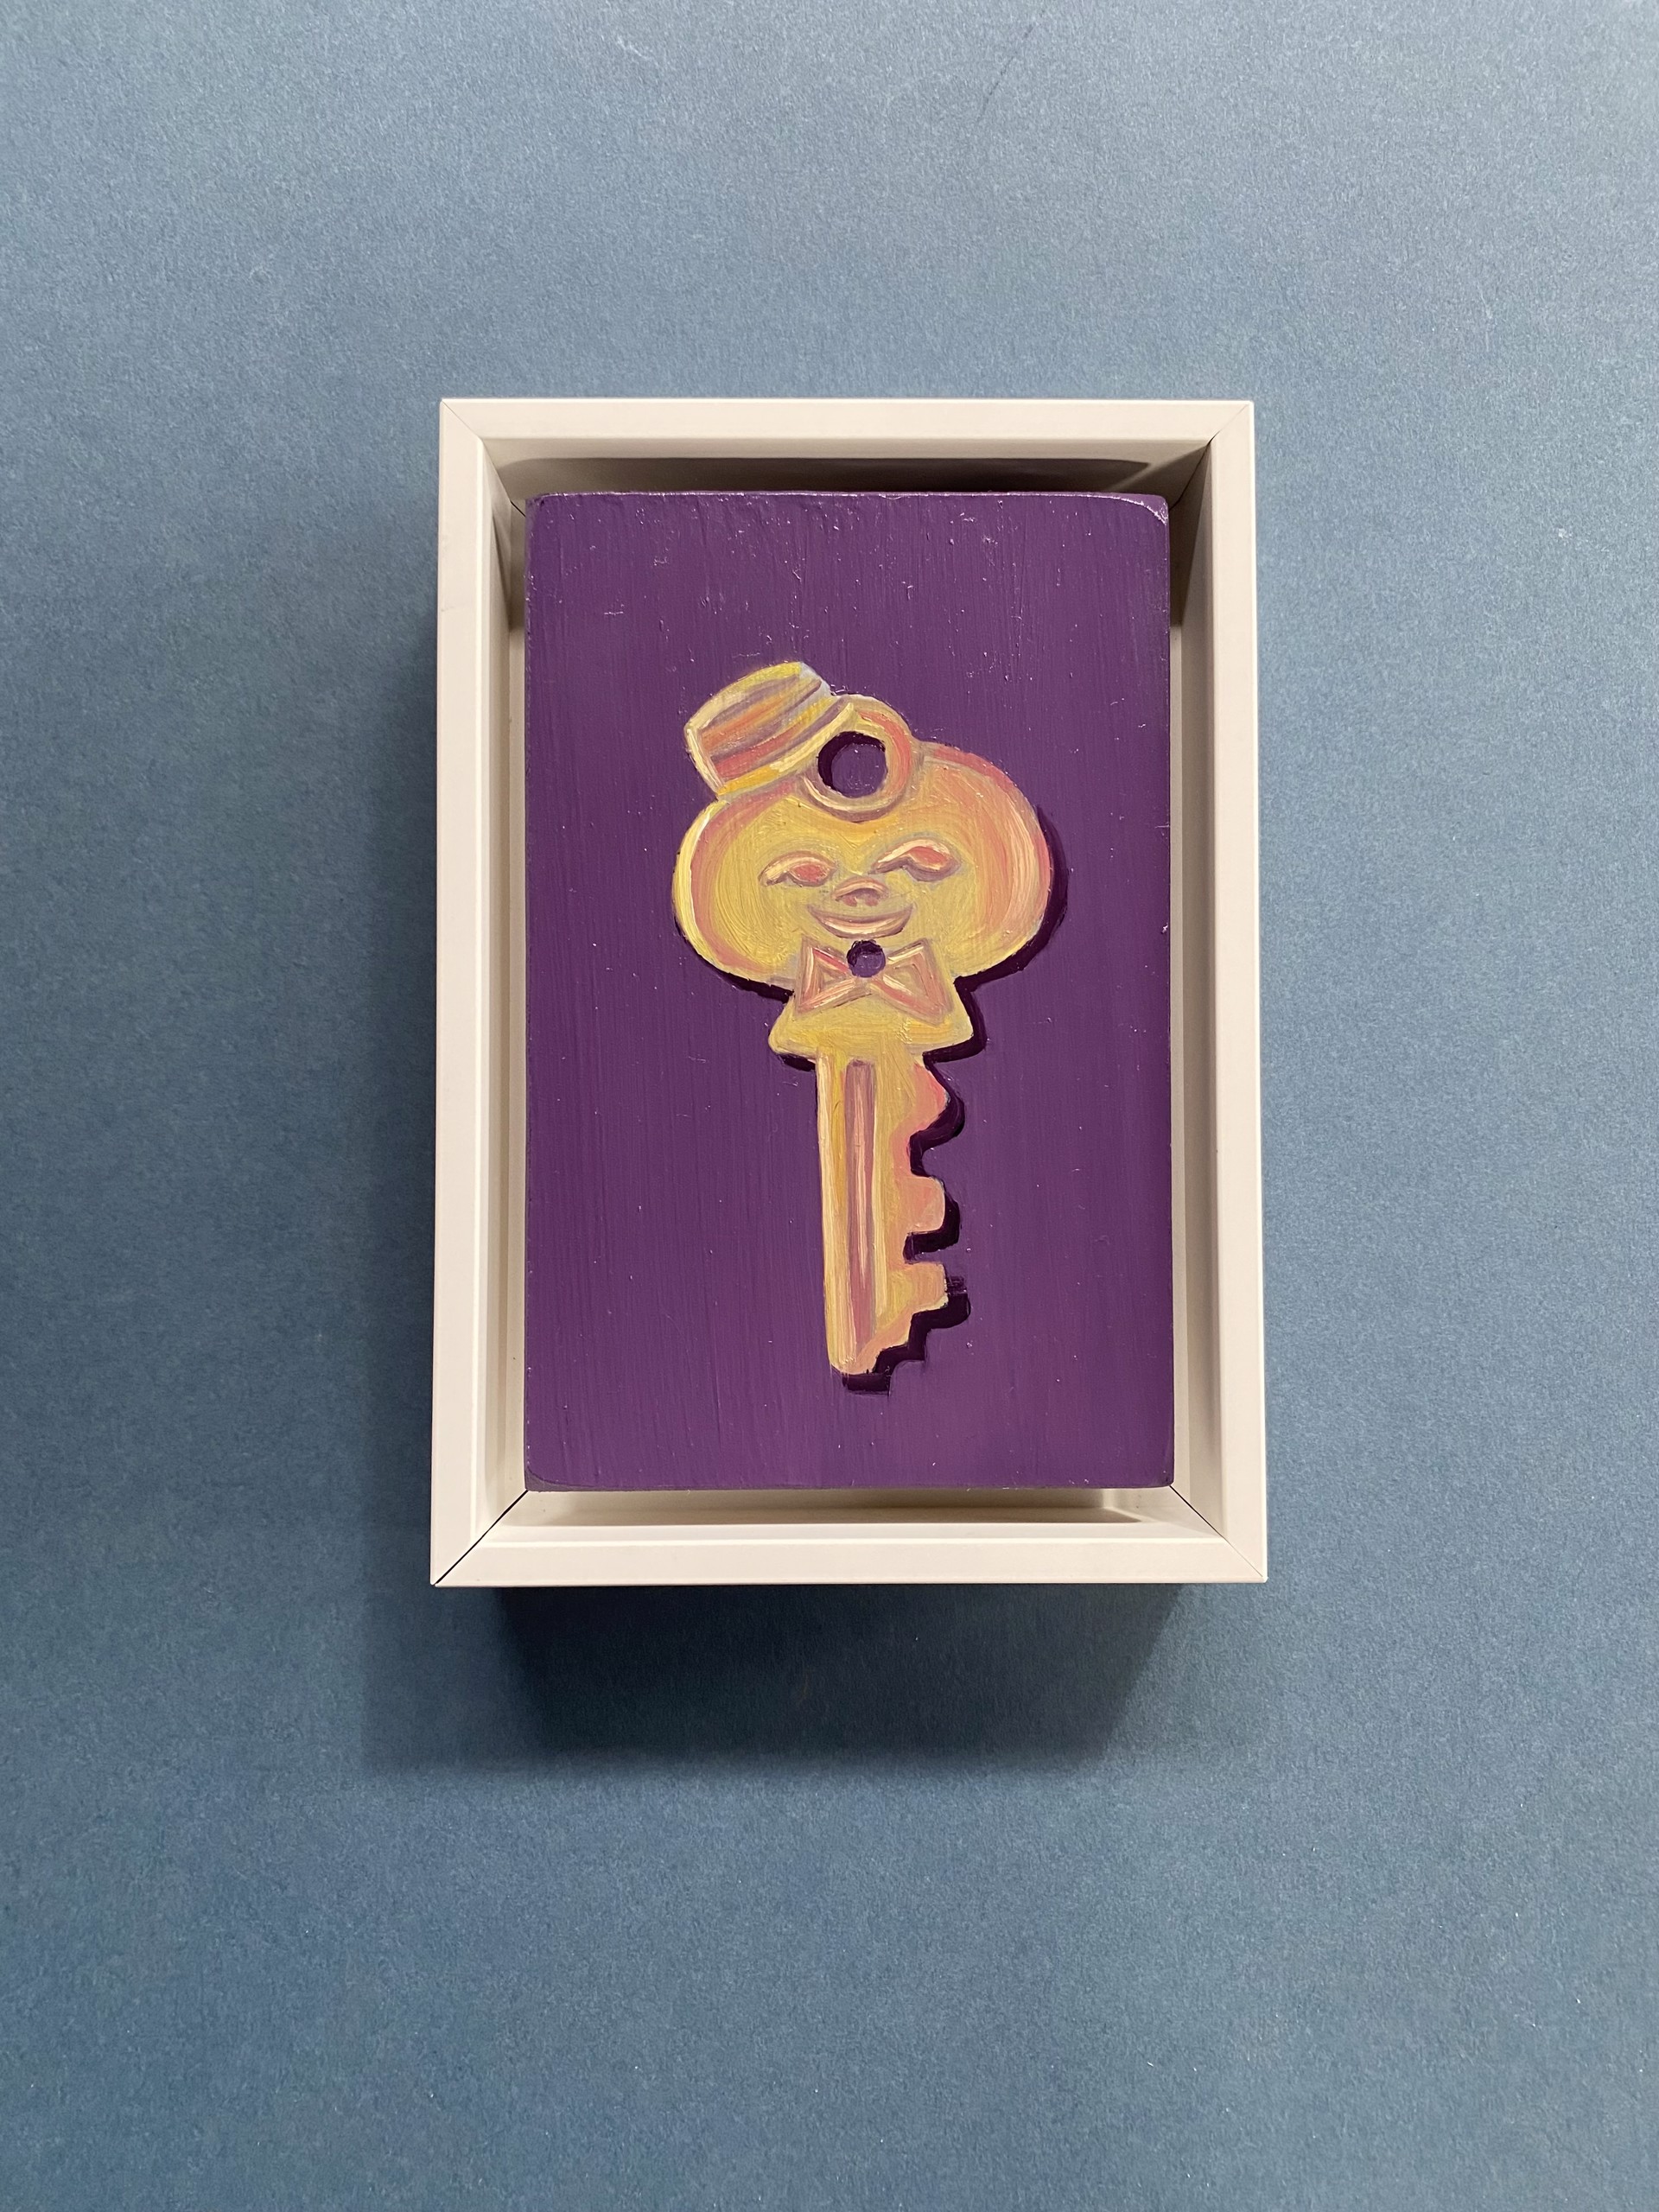 Key No. 38 by Stephen Wells